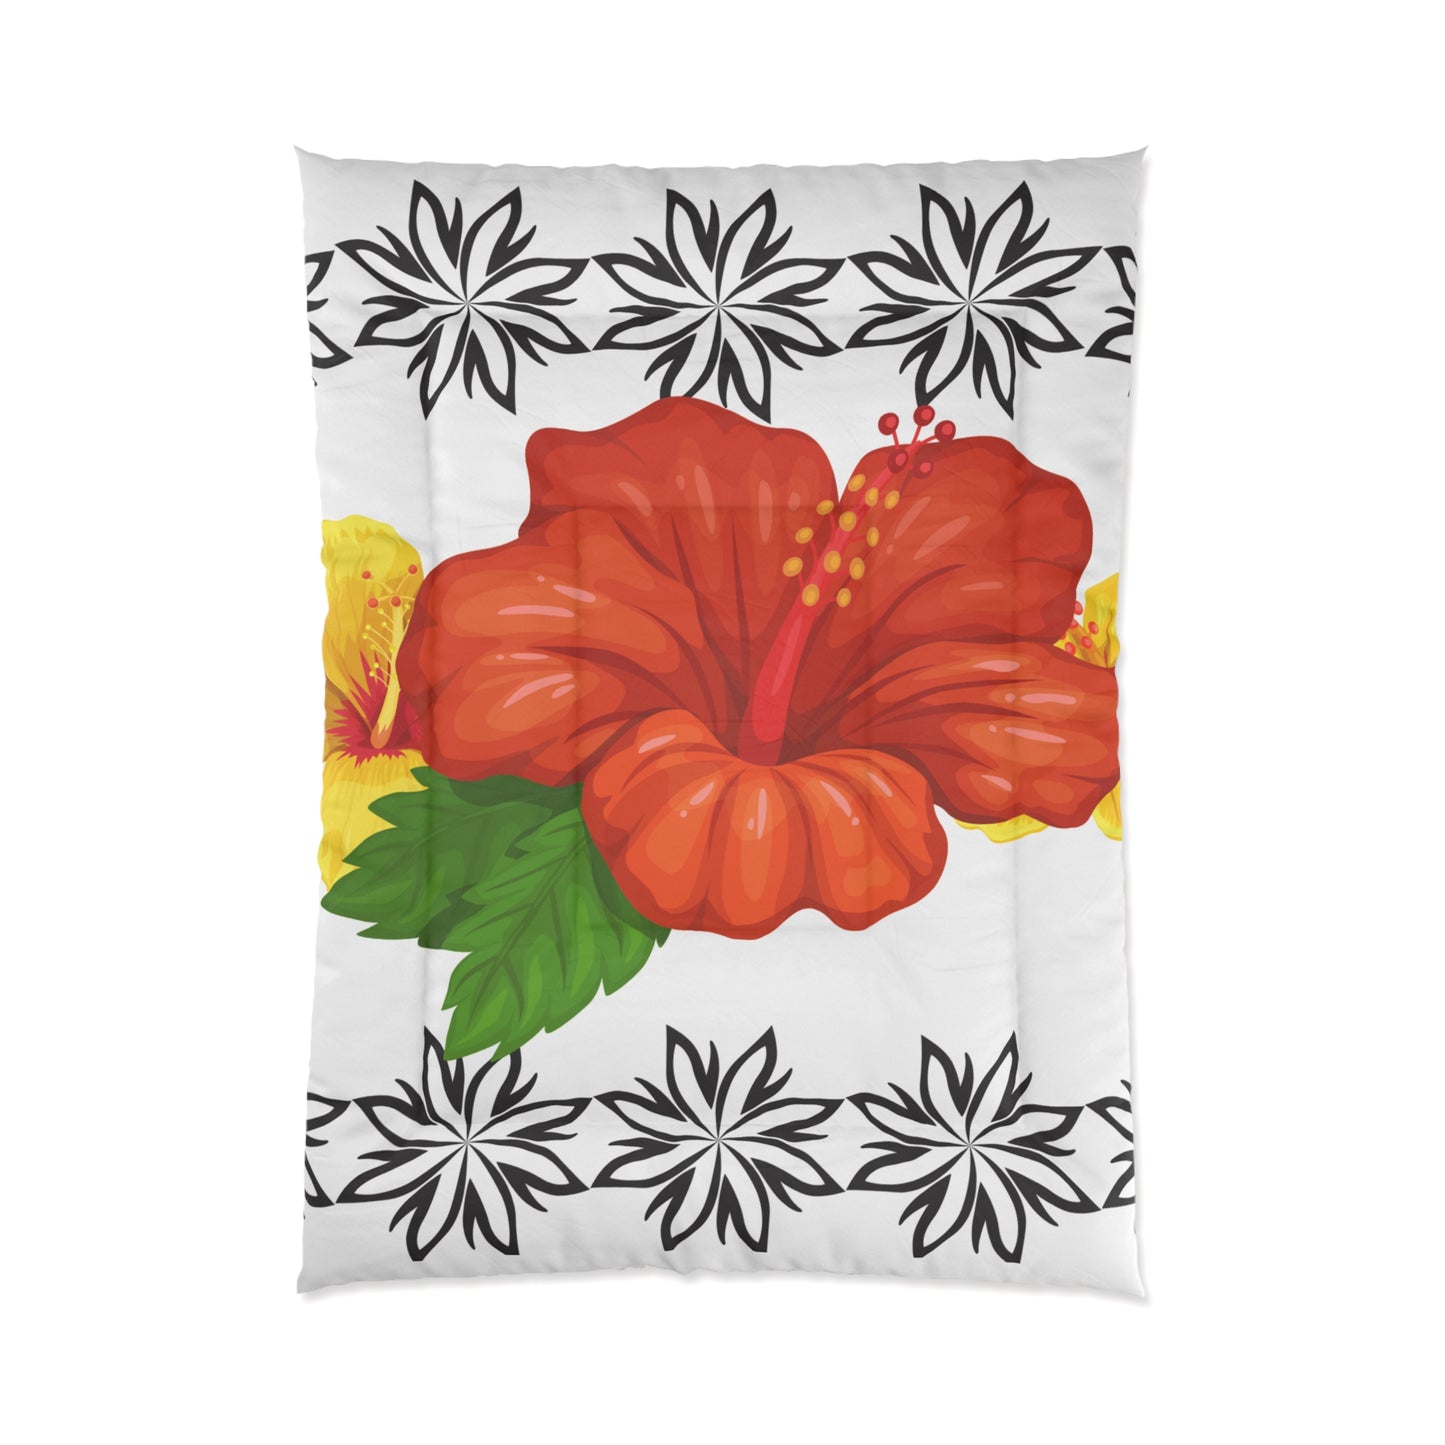 The Ultimate Comfort Doona Blanket - Flower with star edges